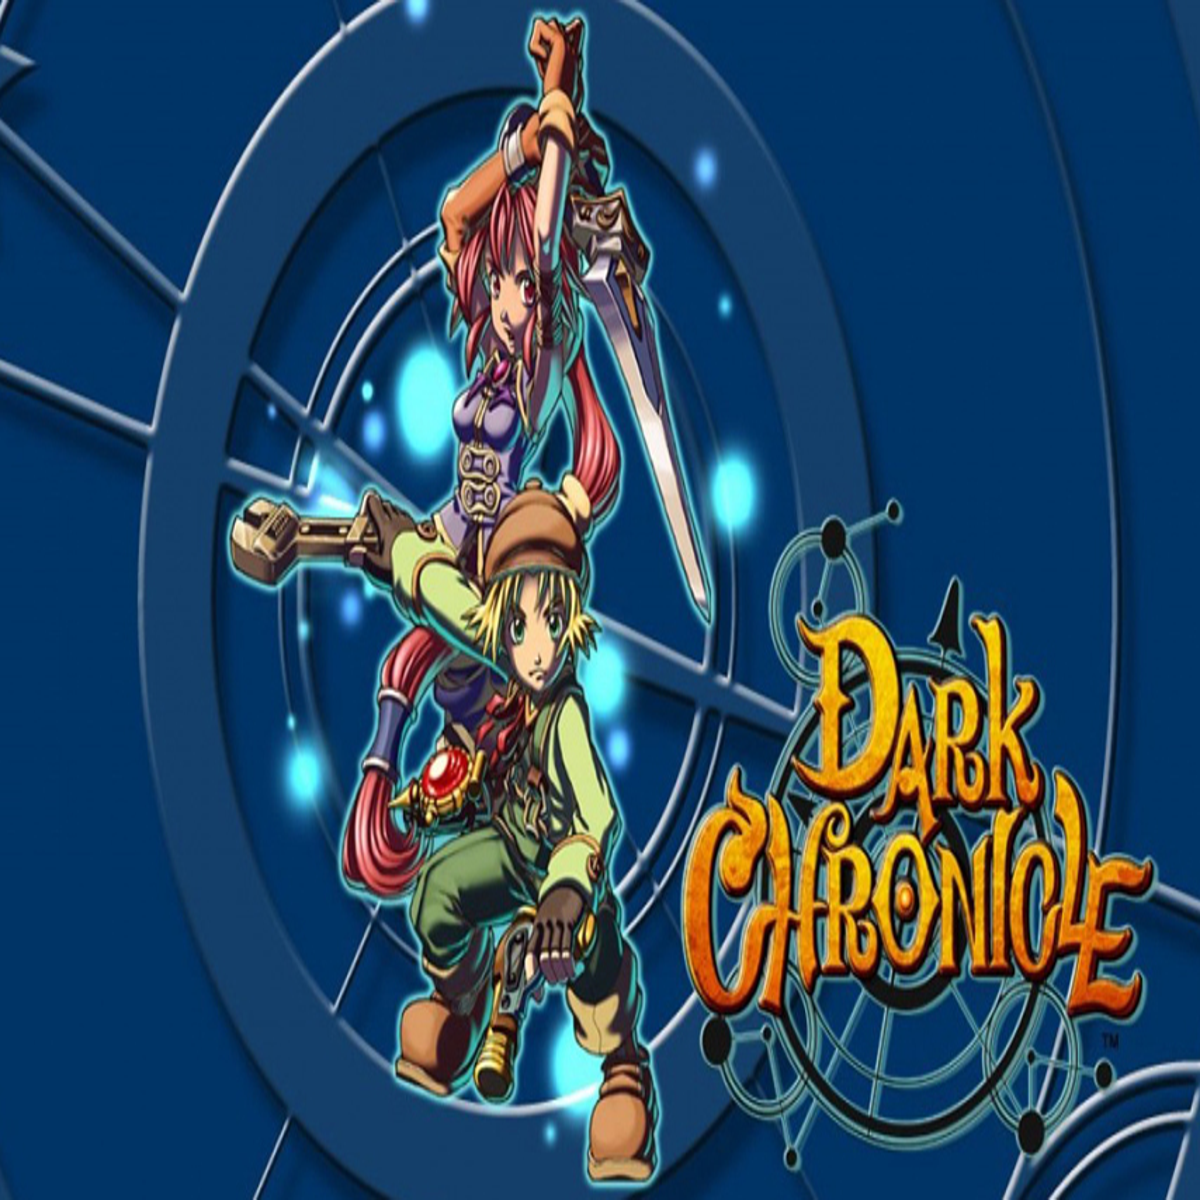 Dark Chronicle is coming to PS4 next week • Eurogamer.net